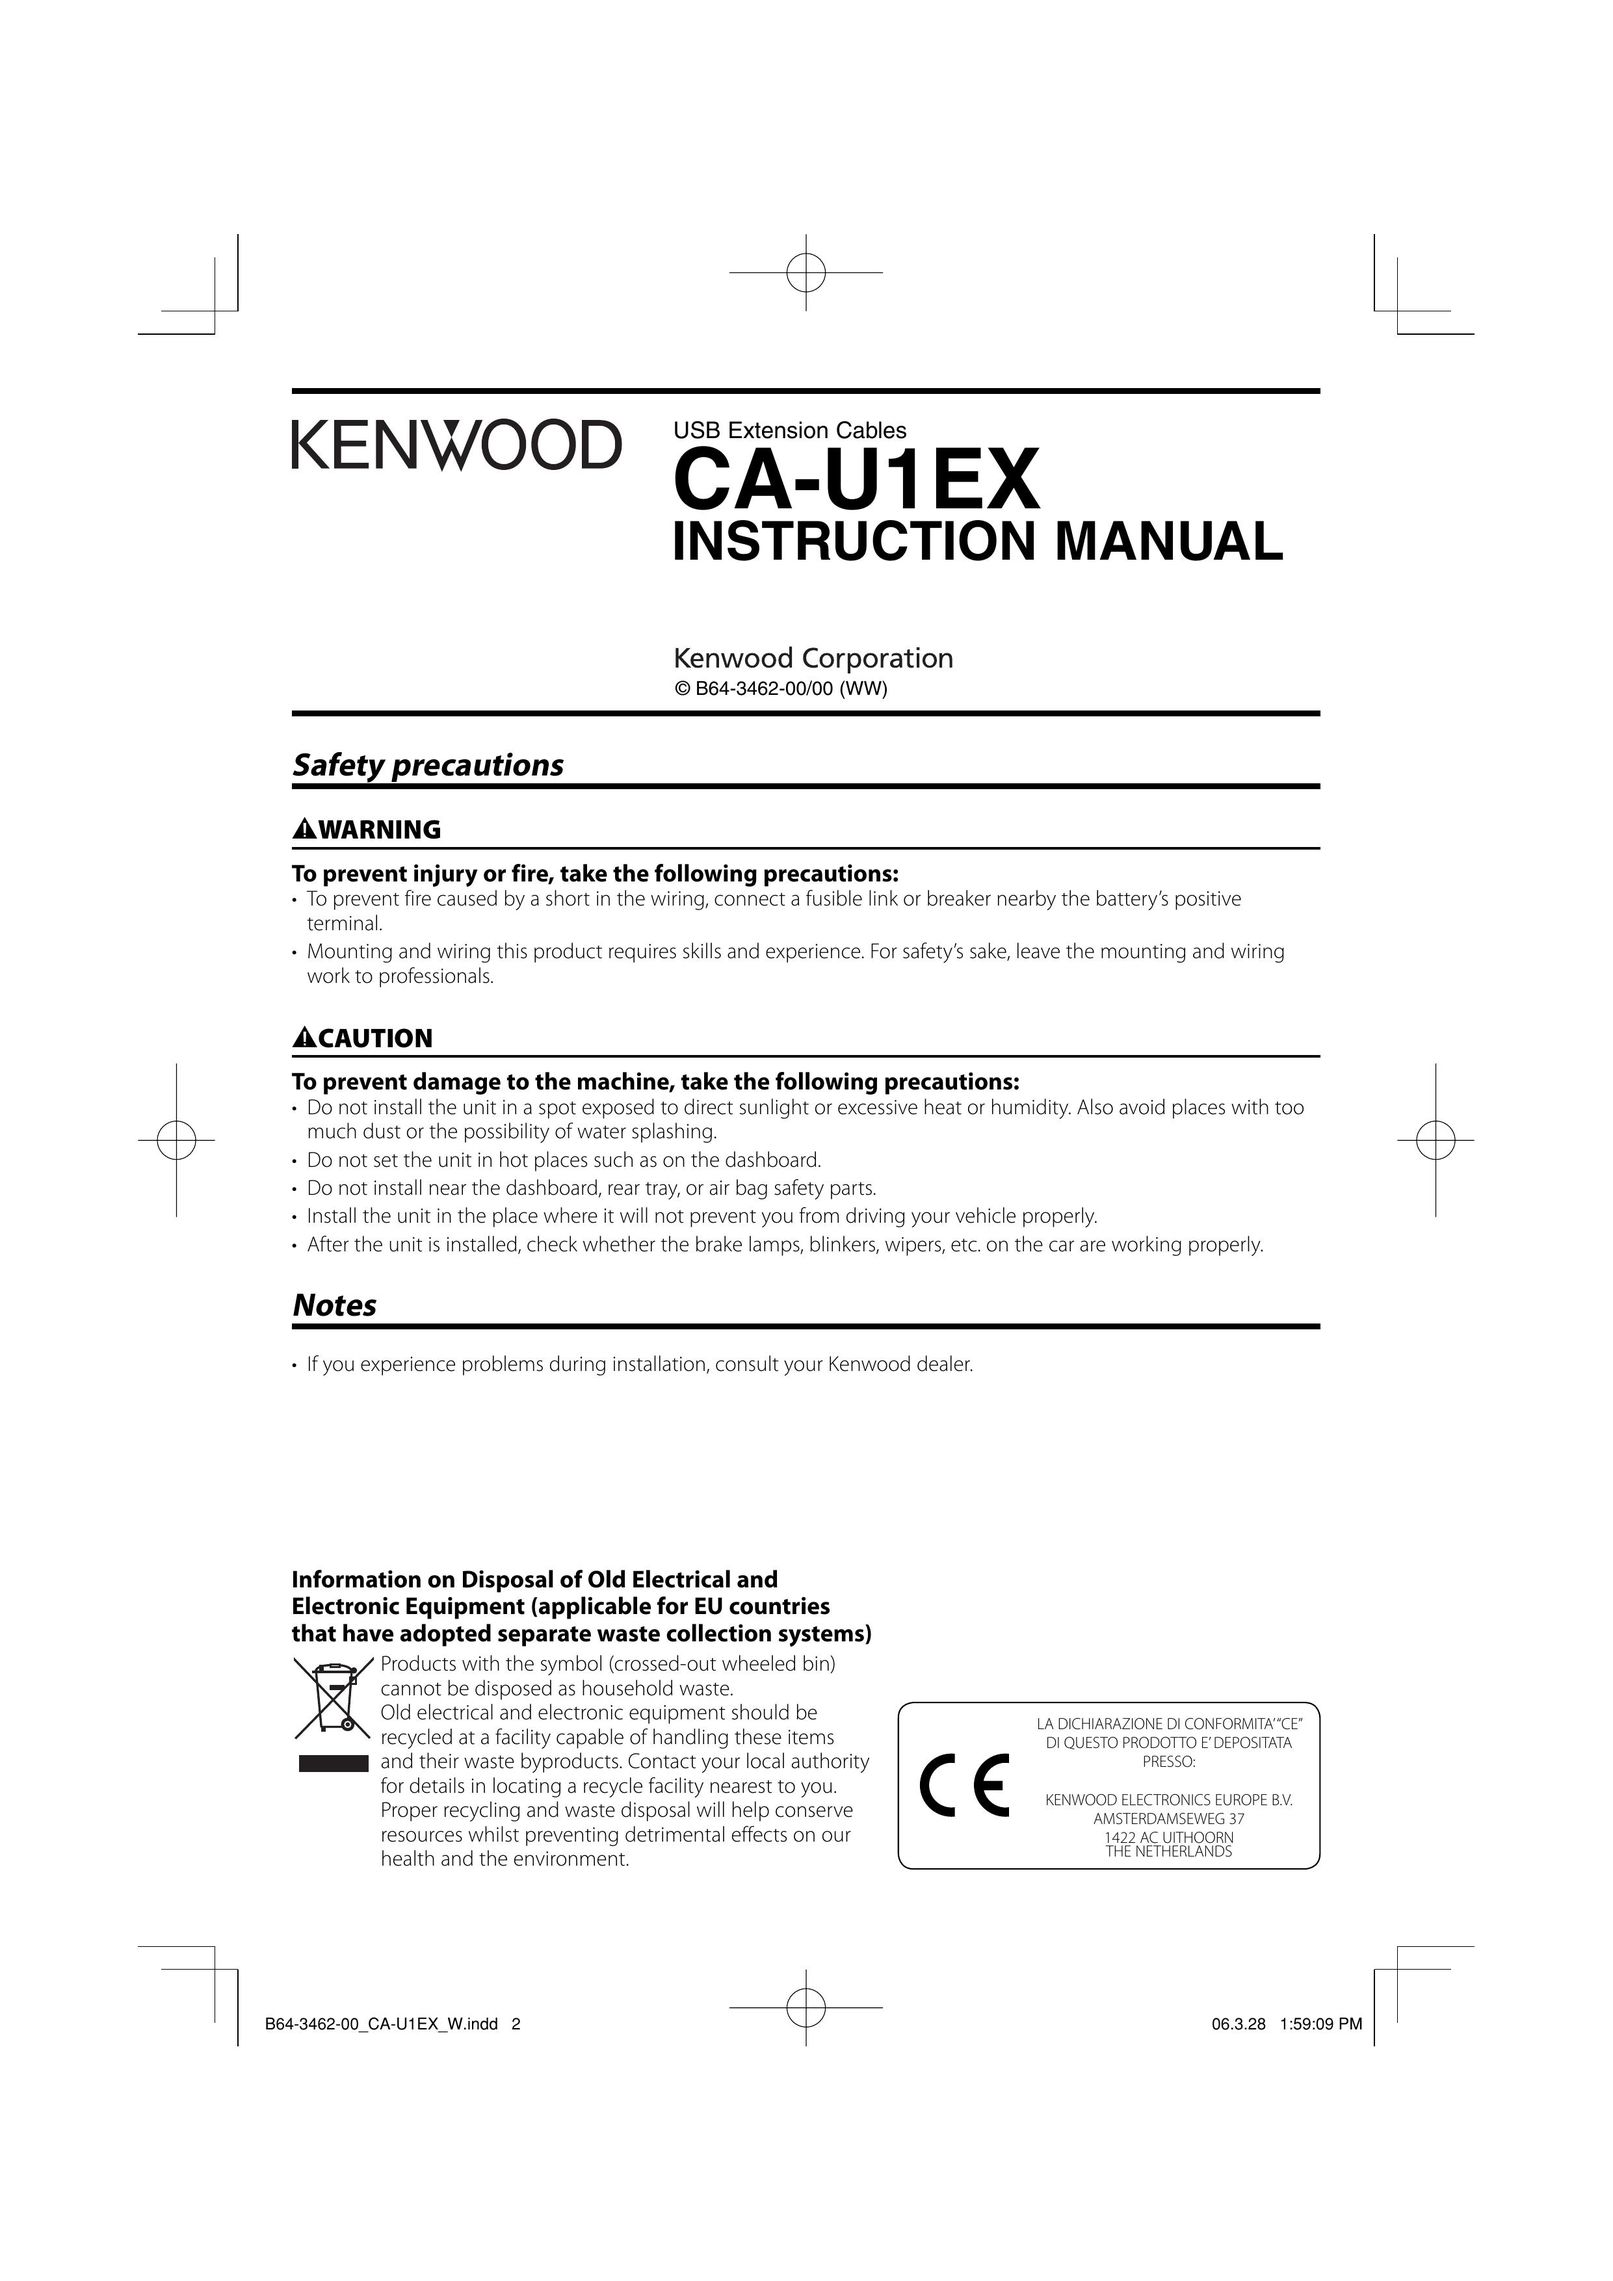 Kenwood CA-U1EX Computer Drive User Manual